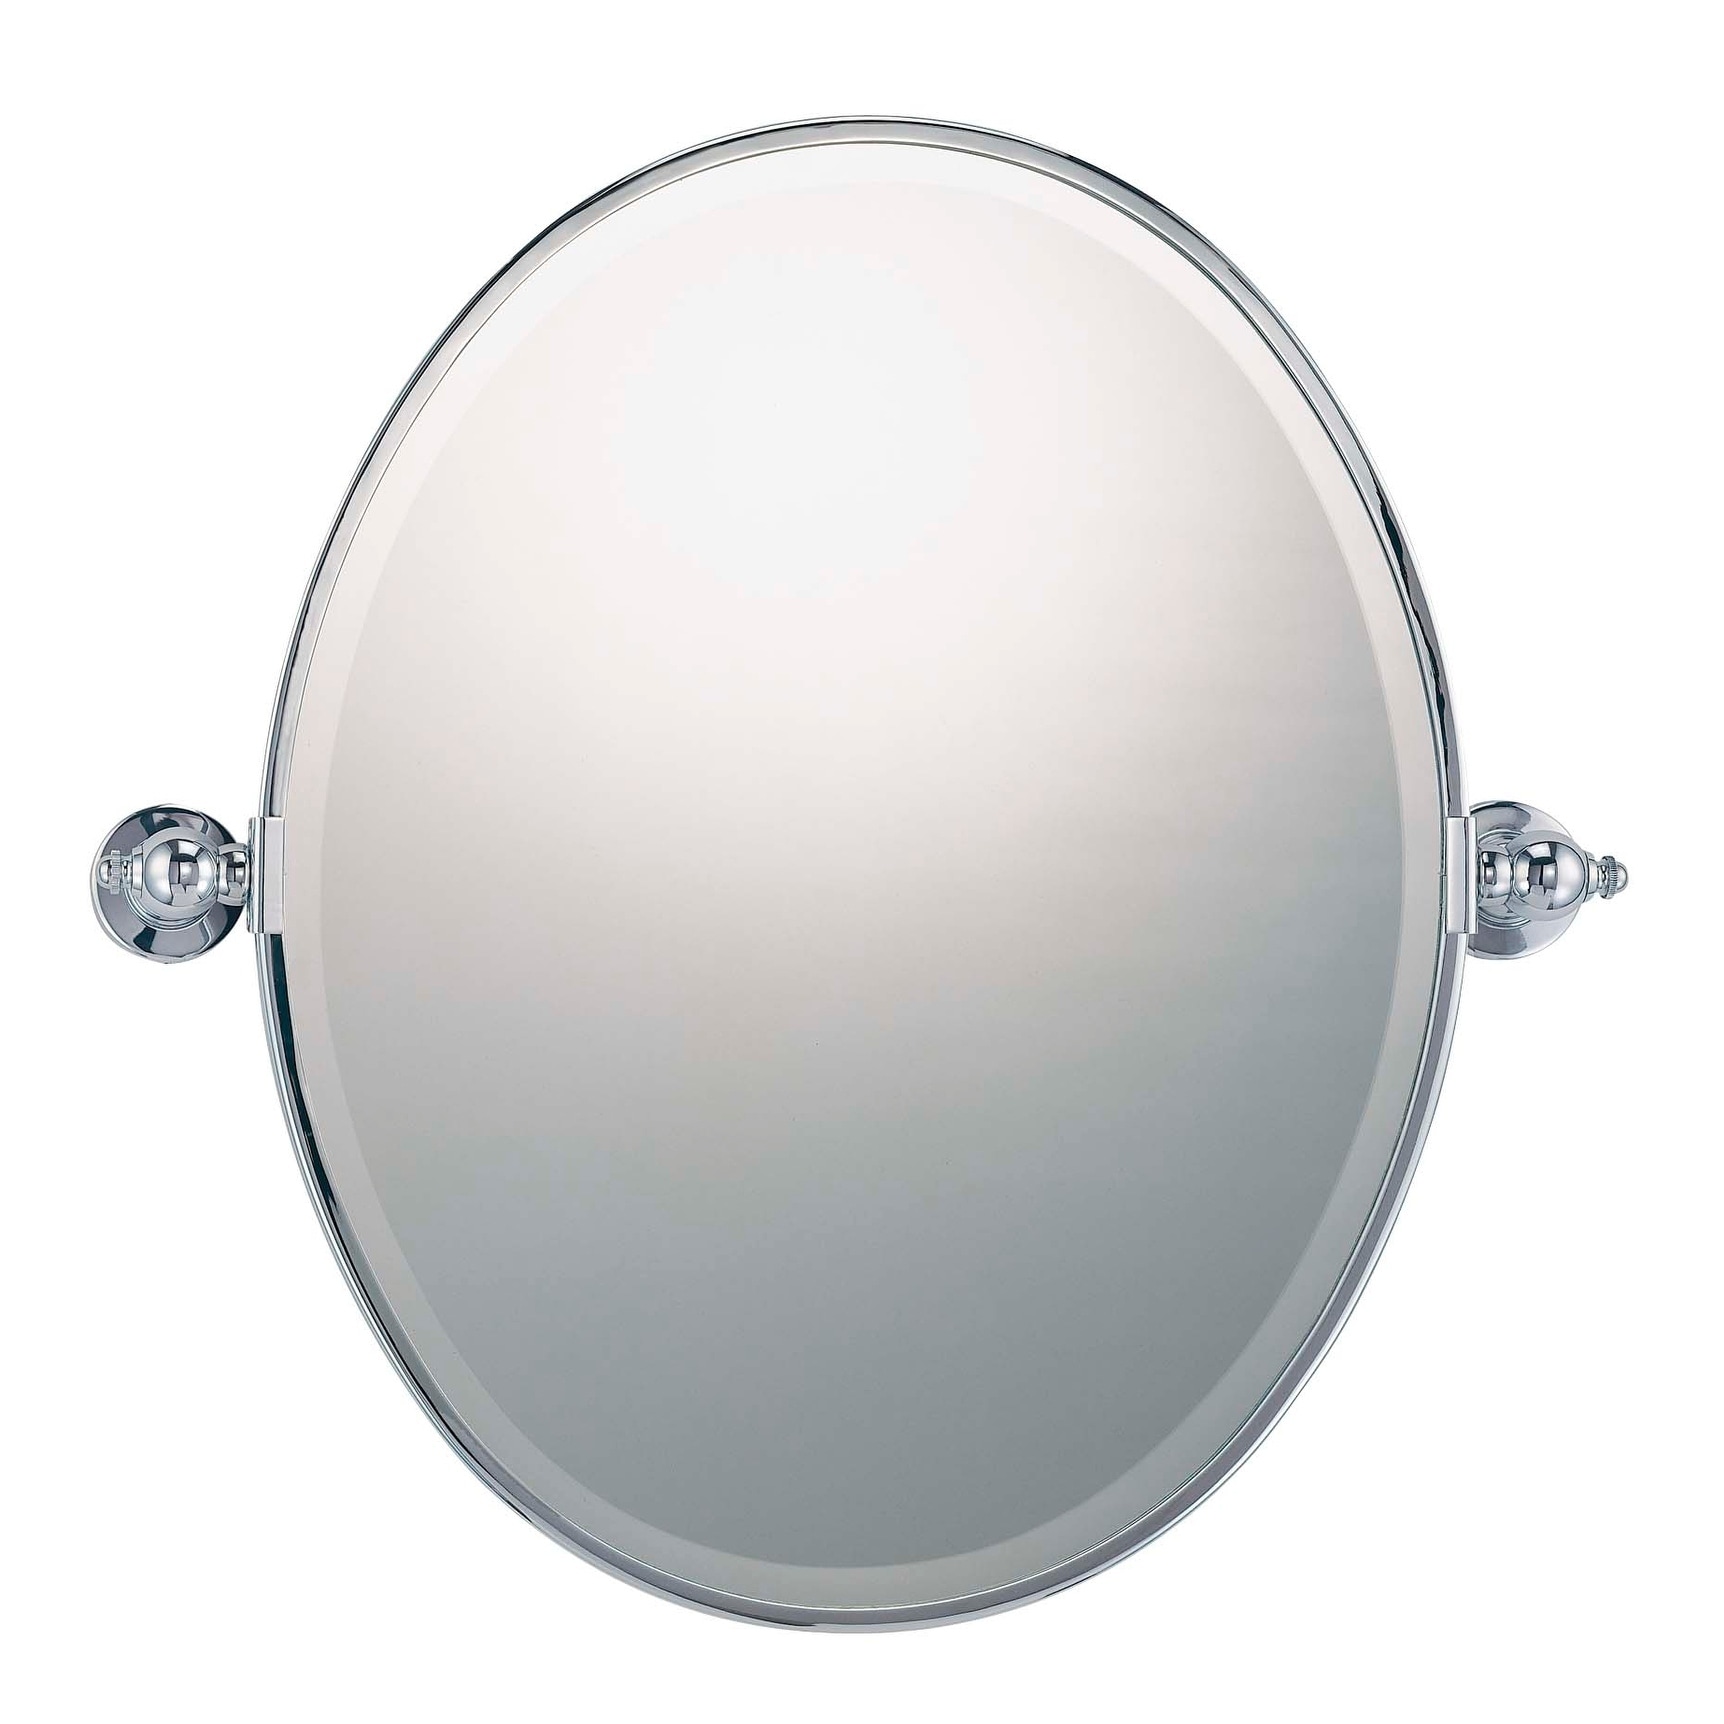 Minka Lavery 1431-77 Oval Mirror, Standard, Chrome Finish by Minka Lavery - 3